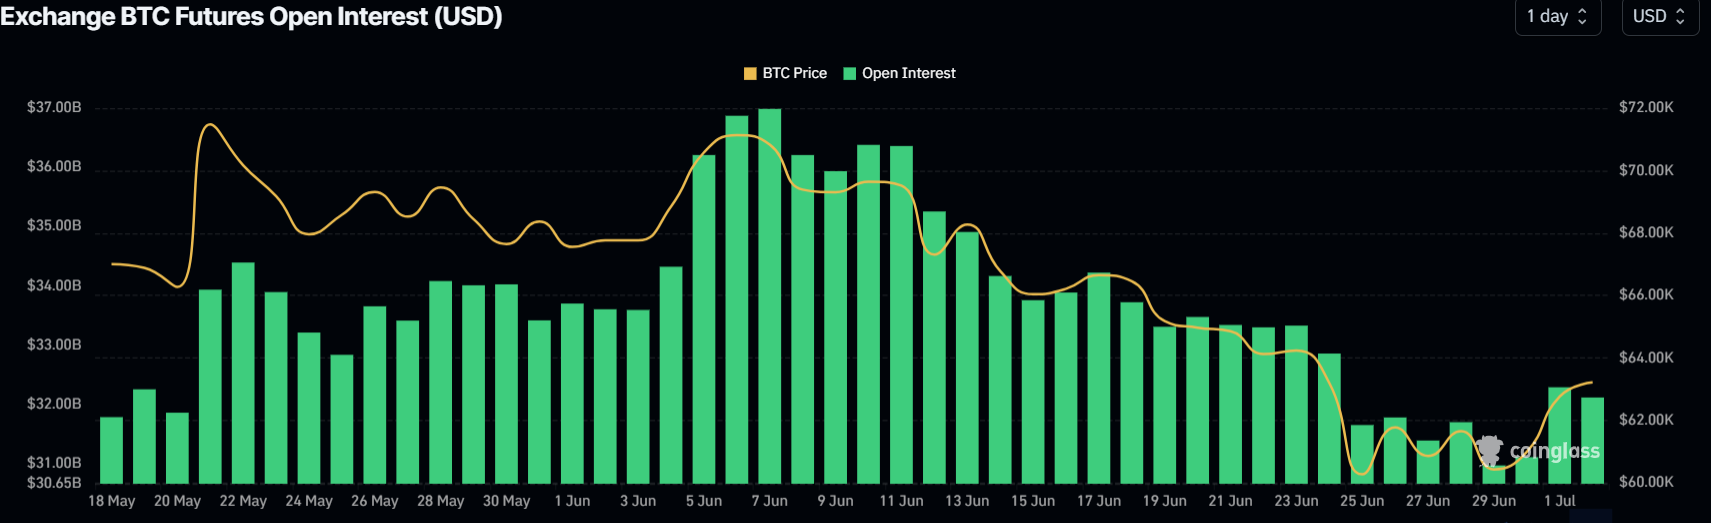 Gráfico de interés abierto de Bitcoin